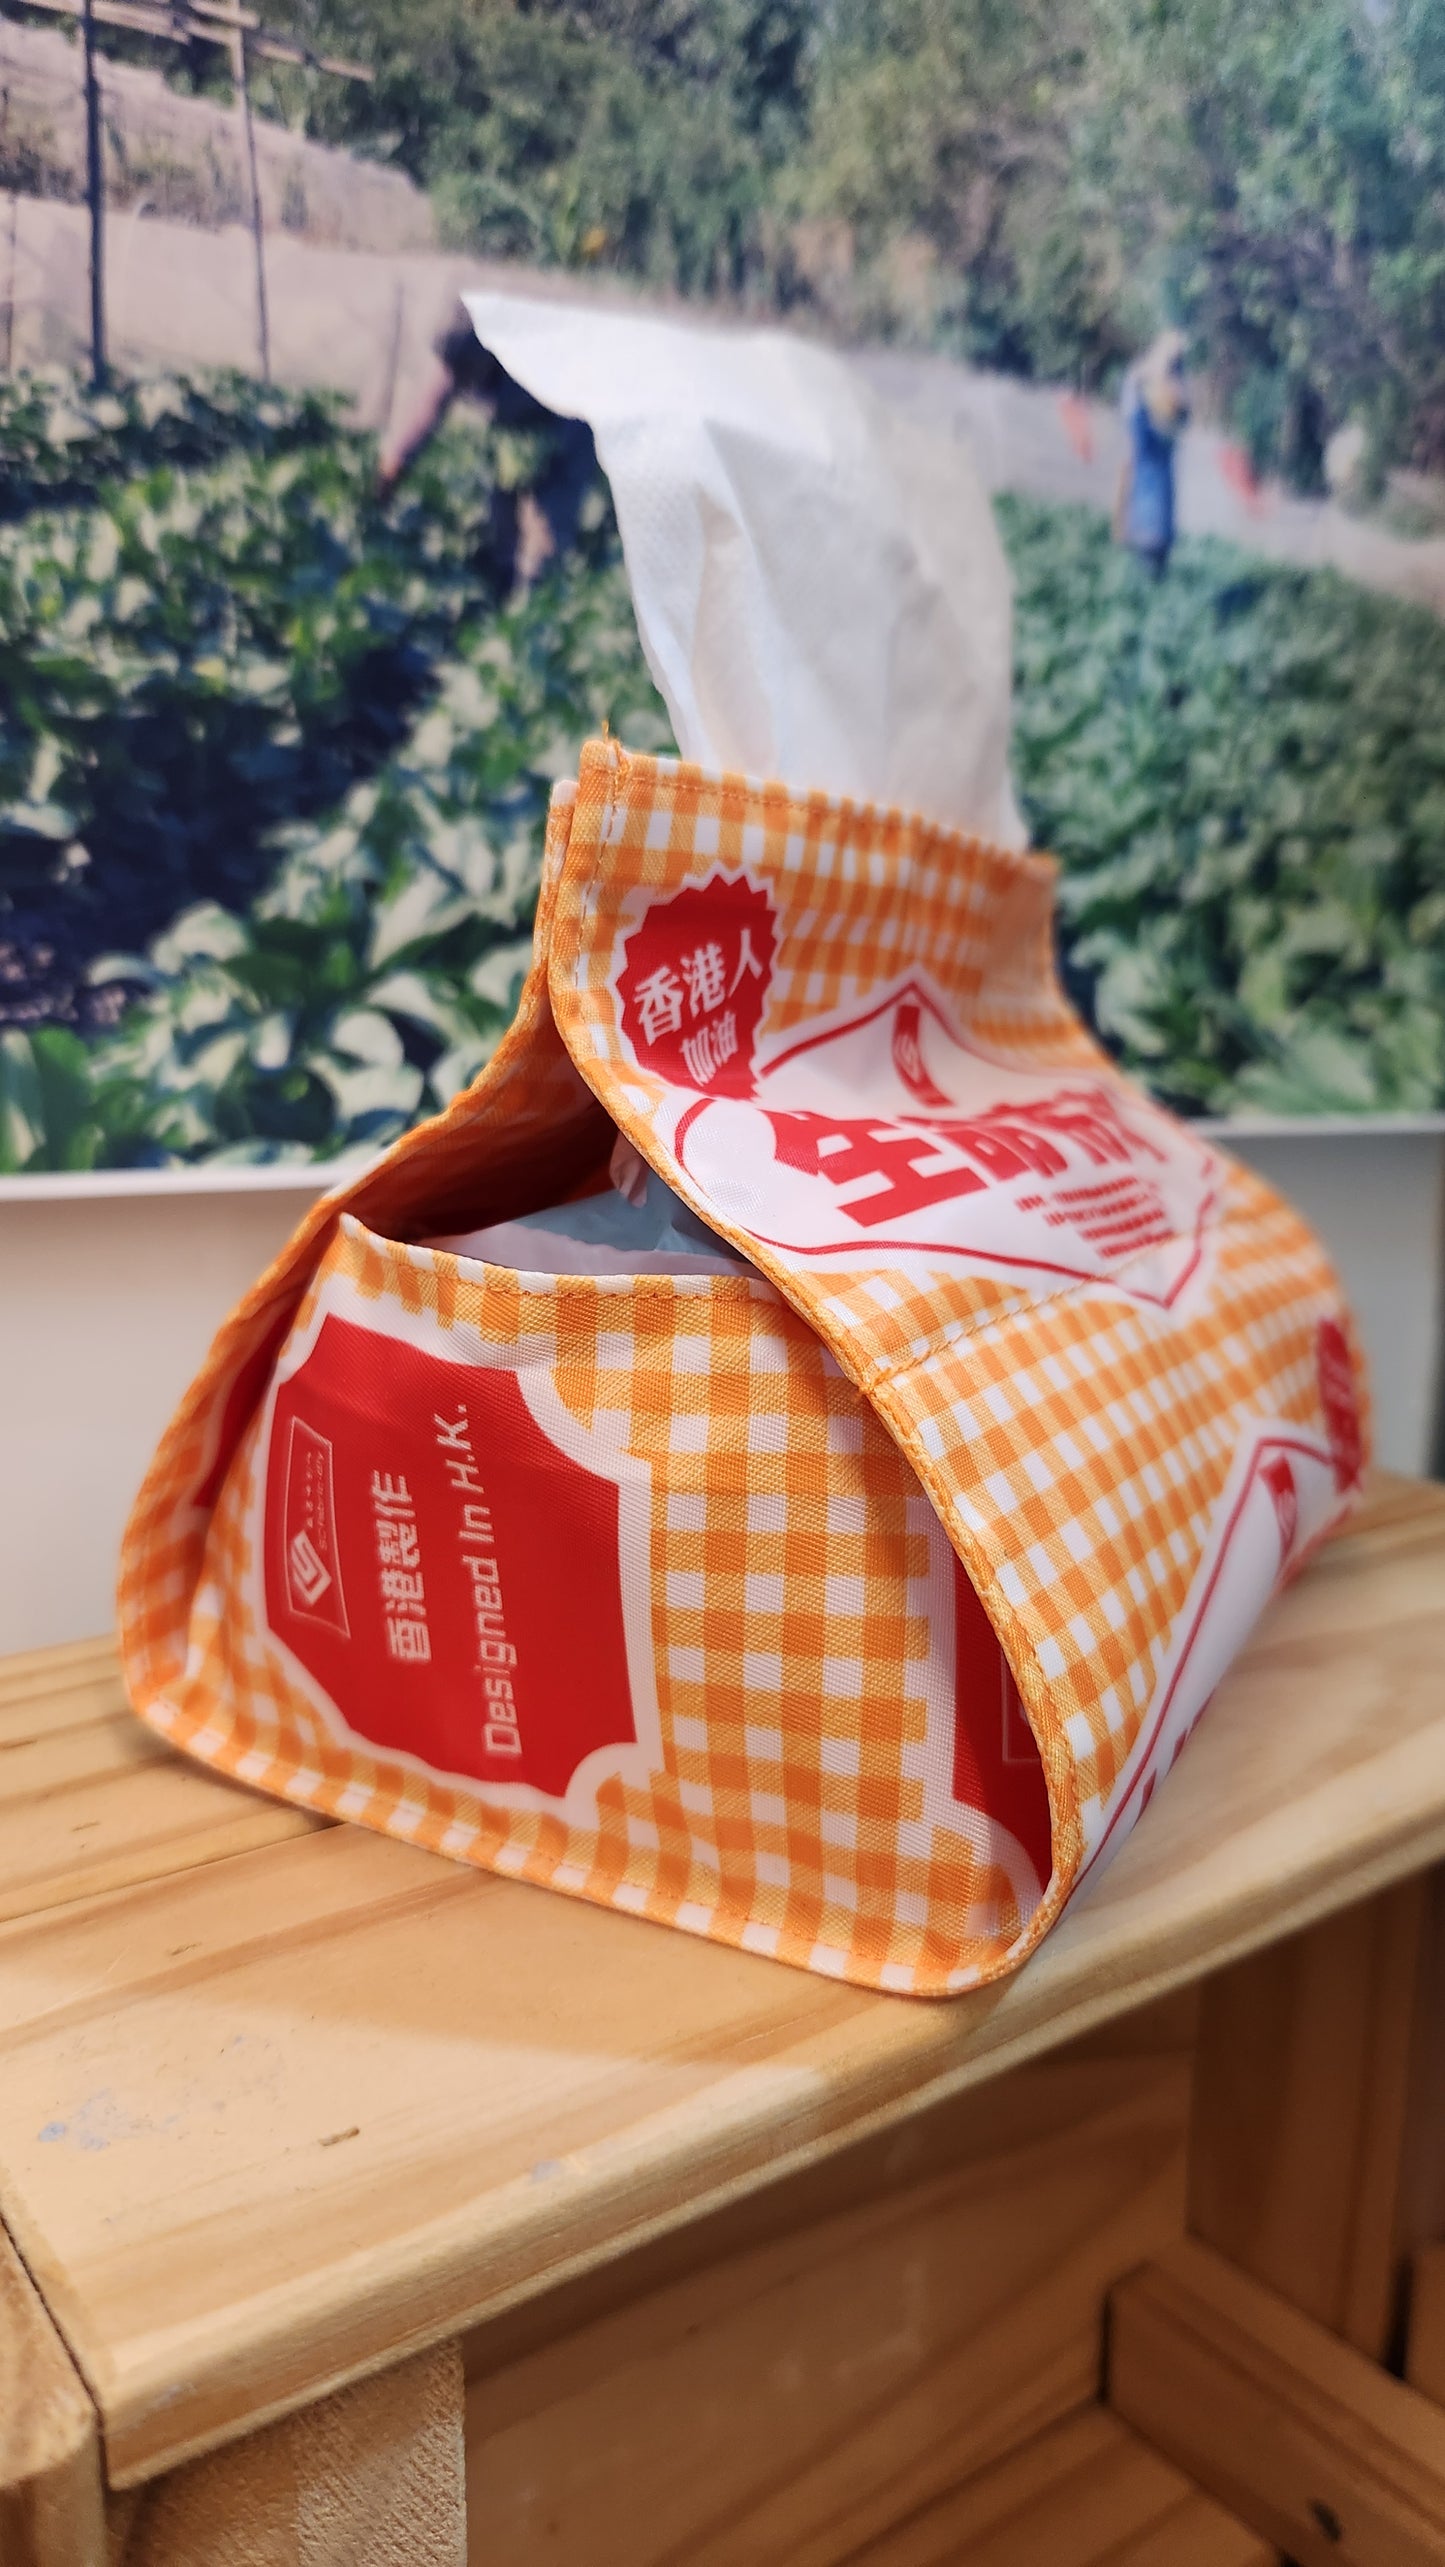 LOMO BAG 紙巾套 Tissue pouch